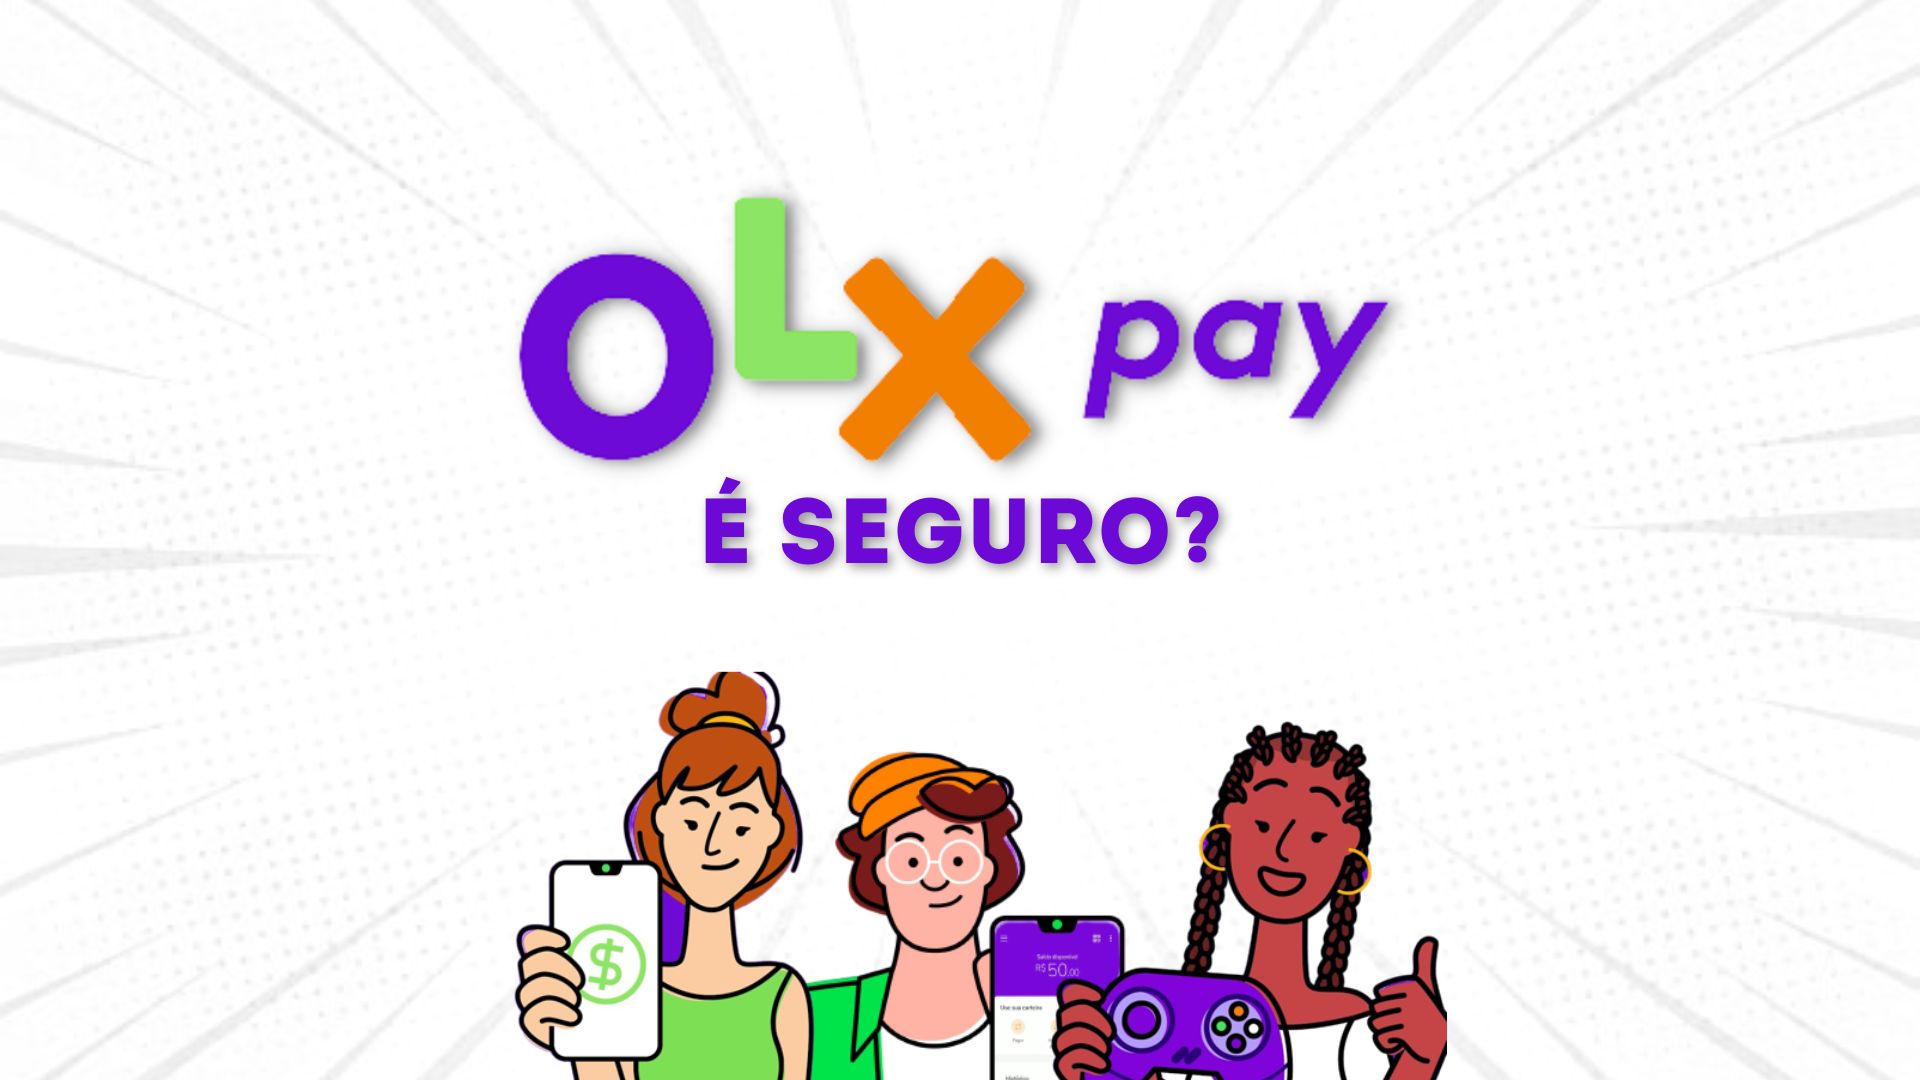 olx pay é seguro